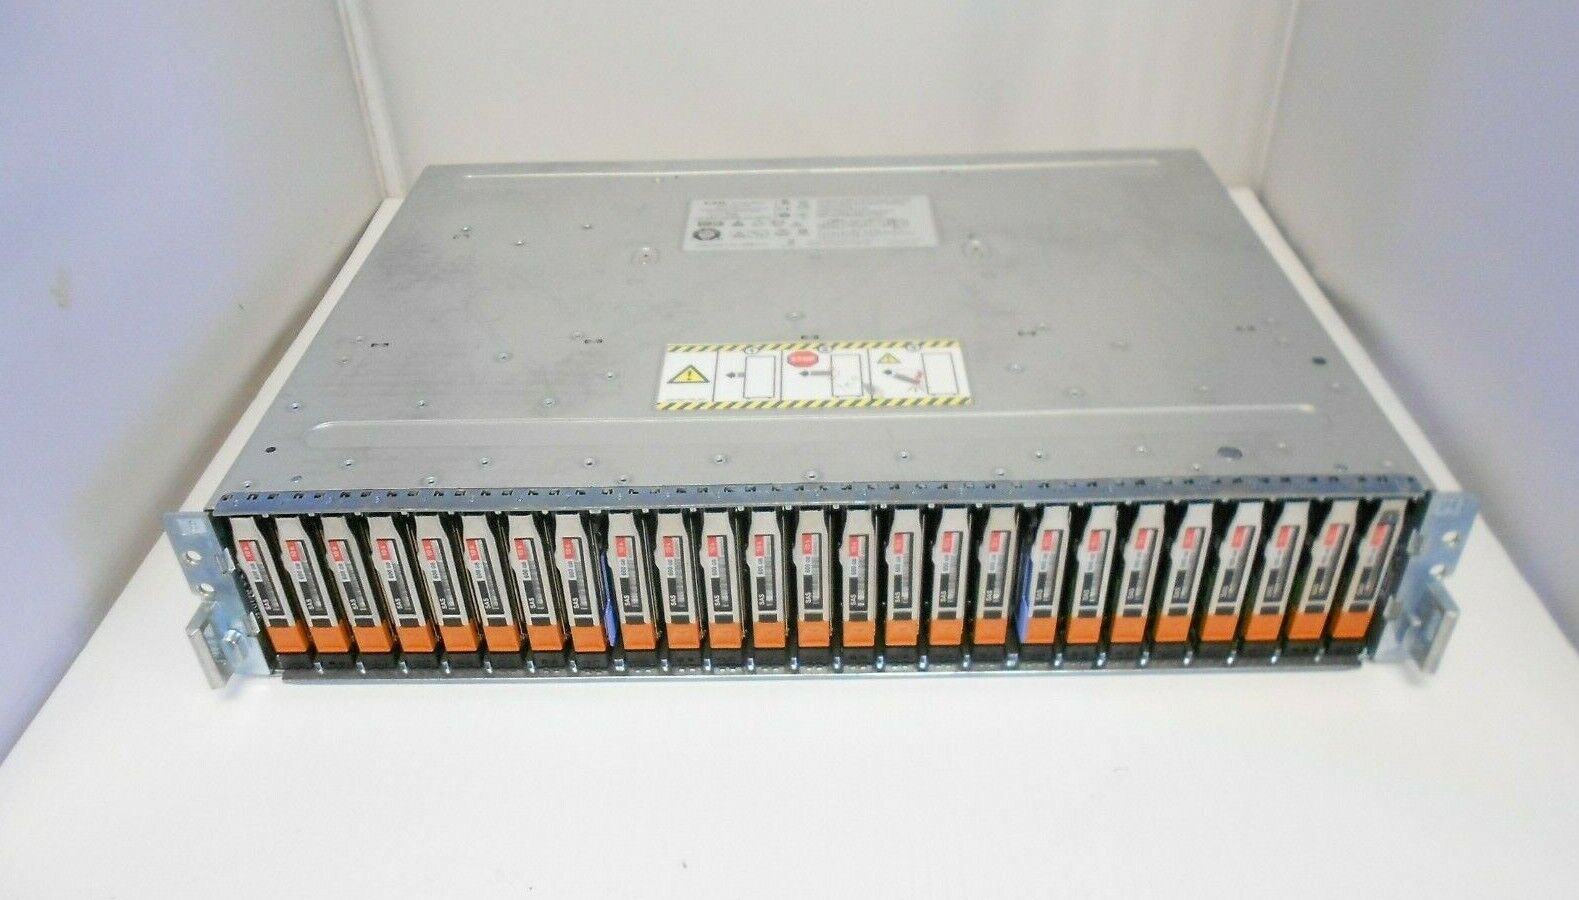 EMC 25x 1.2TB 10K Server Hard Drive Array Storage Expansion JBOD Chia Dell HP